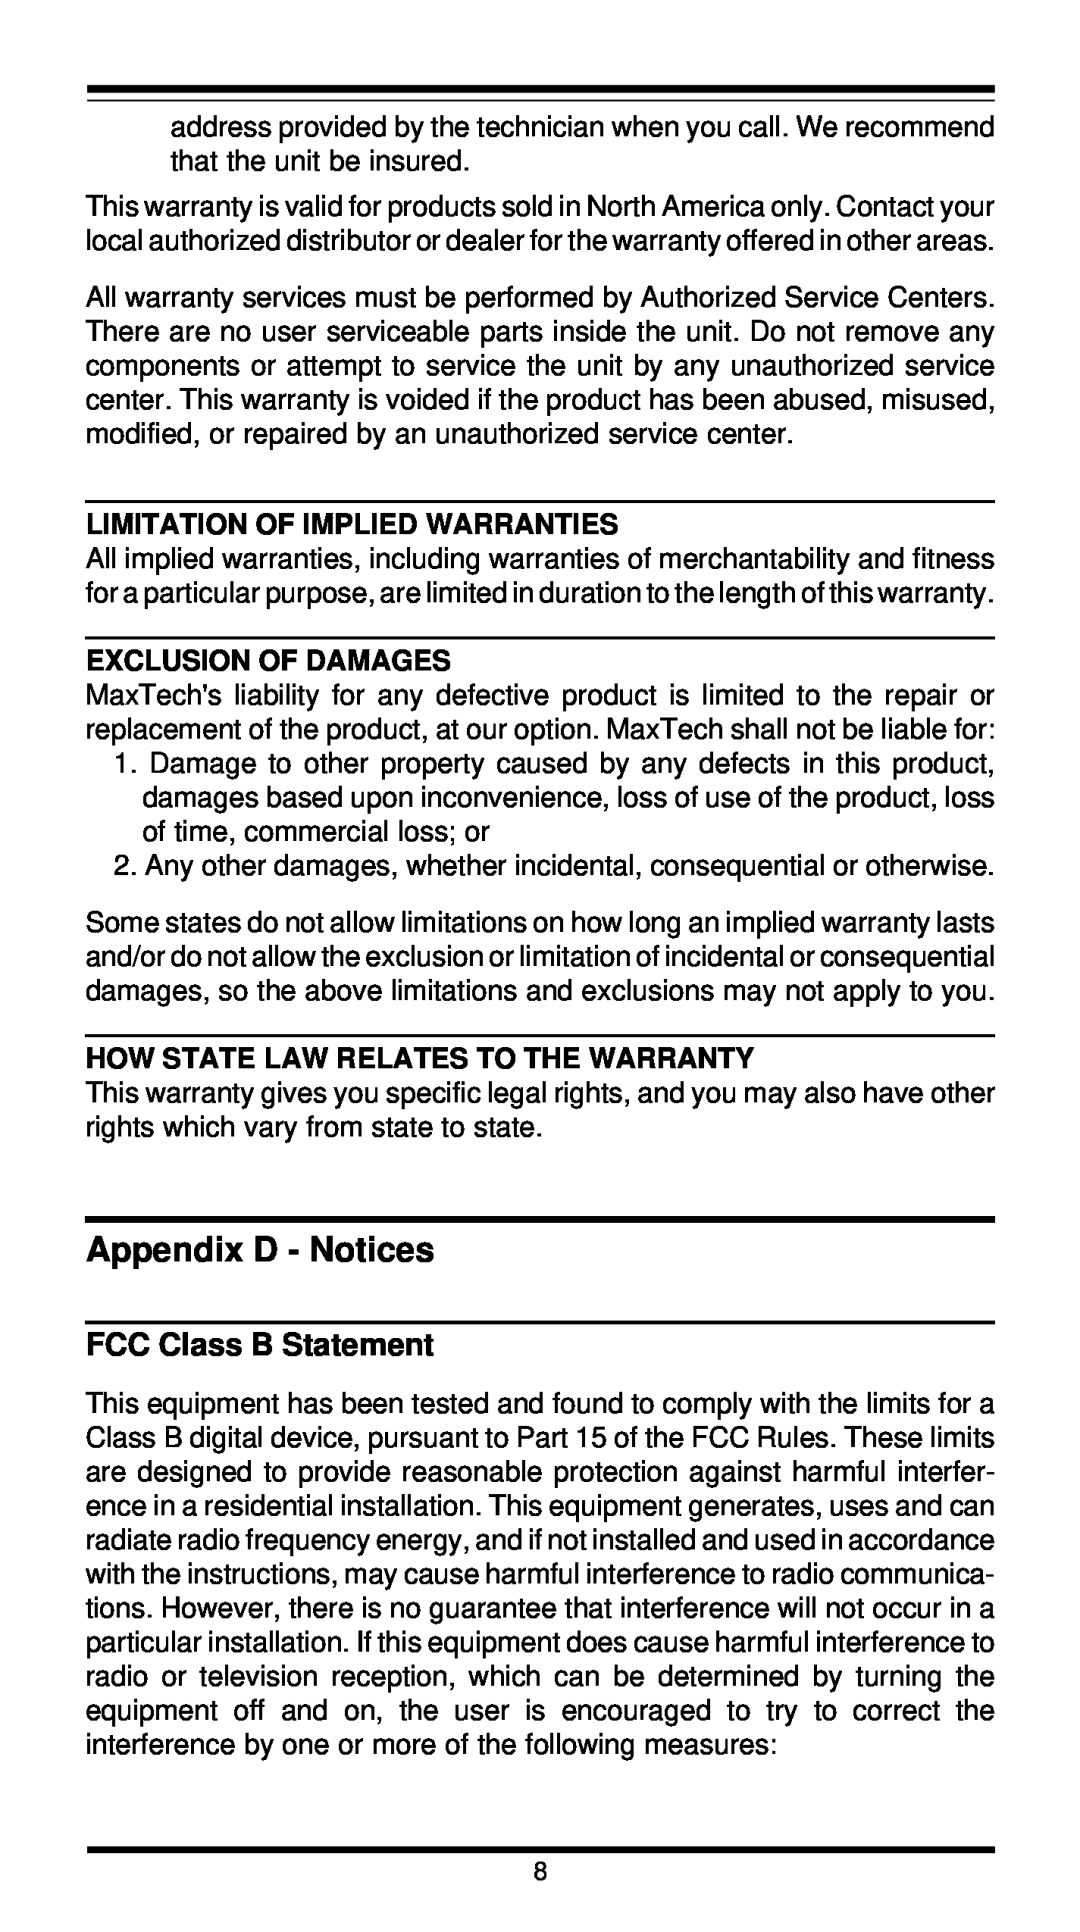 MaxTech XT4862 user manual Appendix D - Notices, FCC Class B Statement 